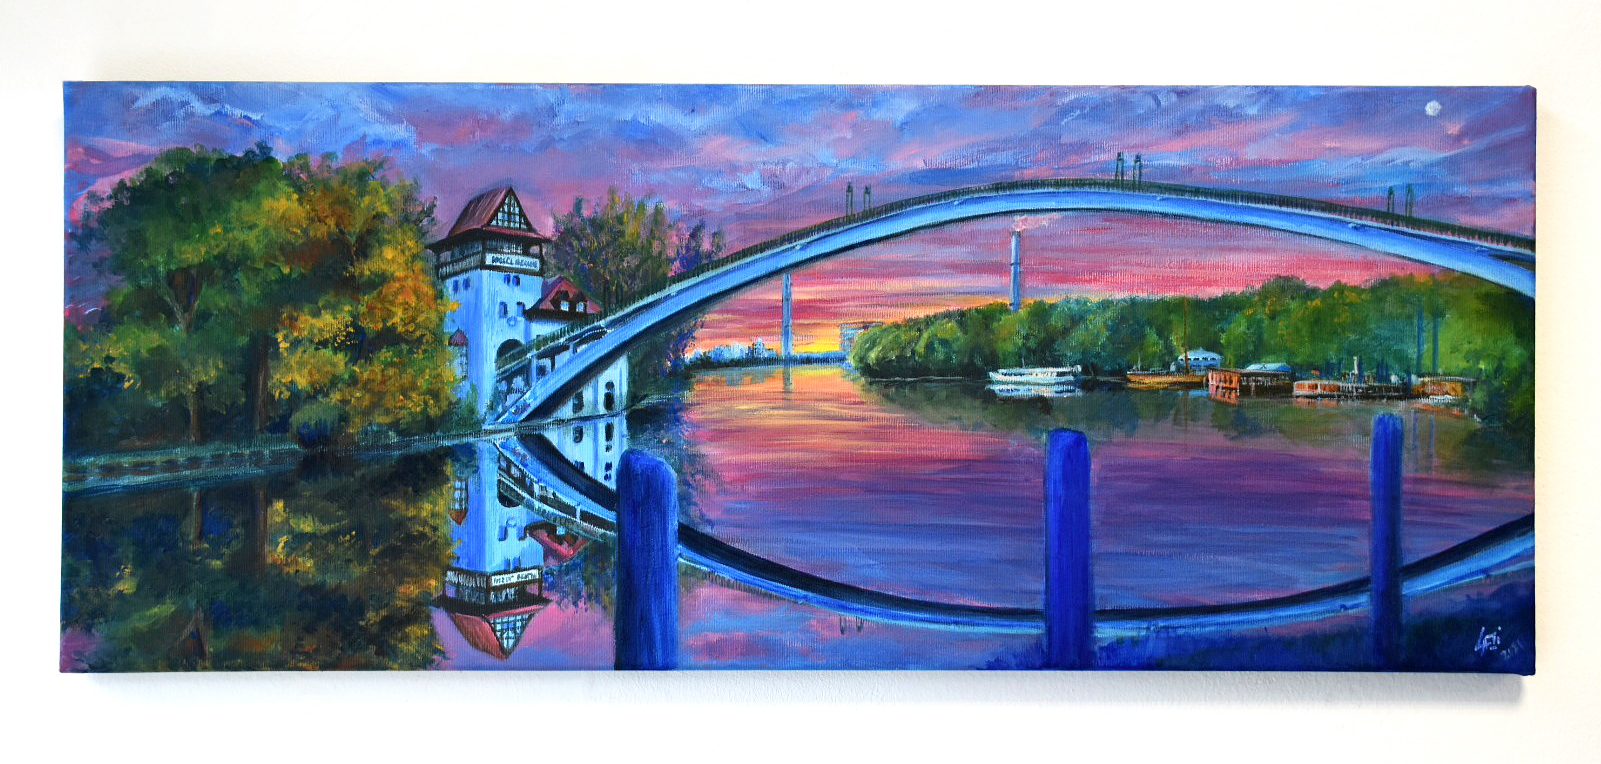 SUNRISE- Reflection Berlin - Bridge Part 1:3, panoramic Serie- acrylic painting on canvas (35x70 cm), Laetitia Hildebrand, 06.05.2021